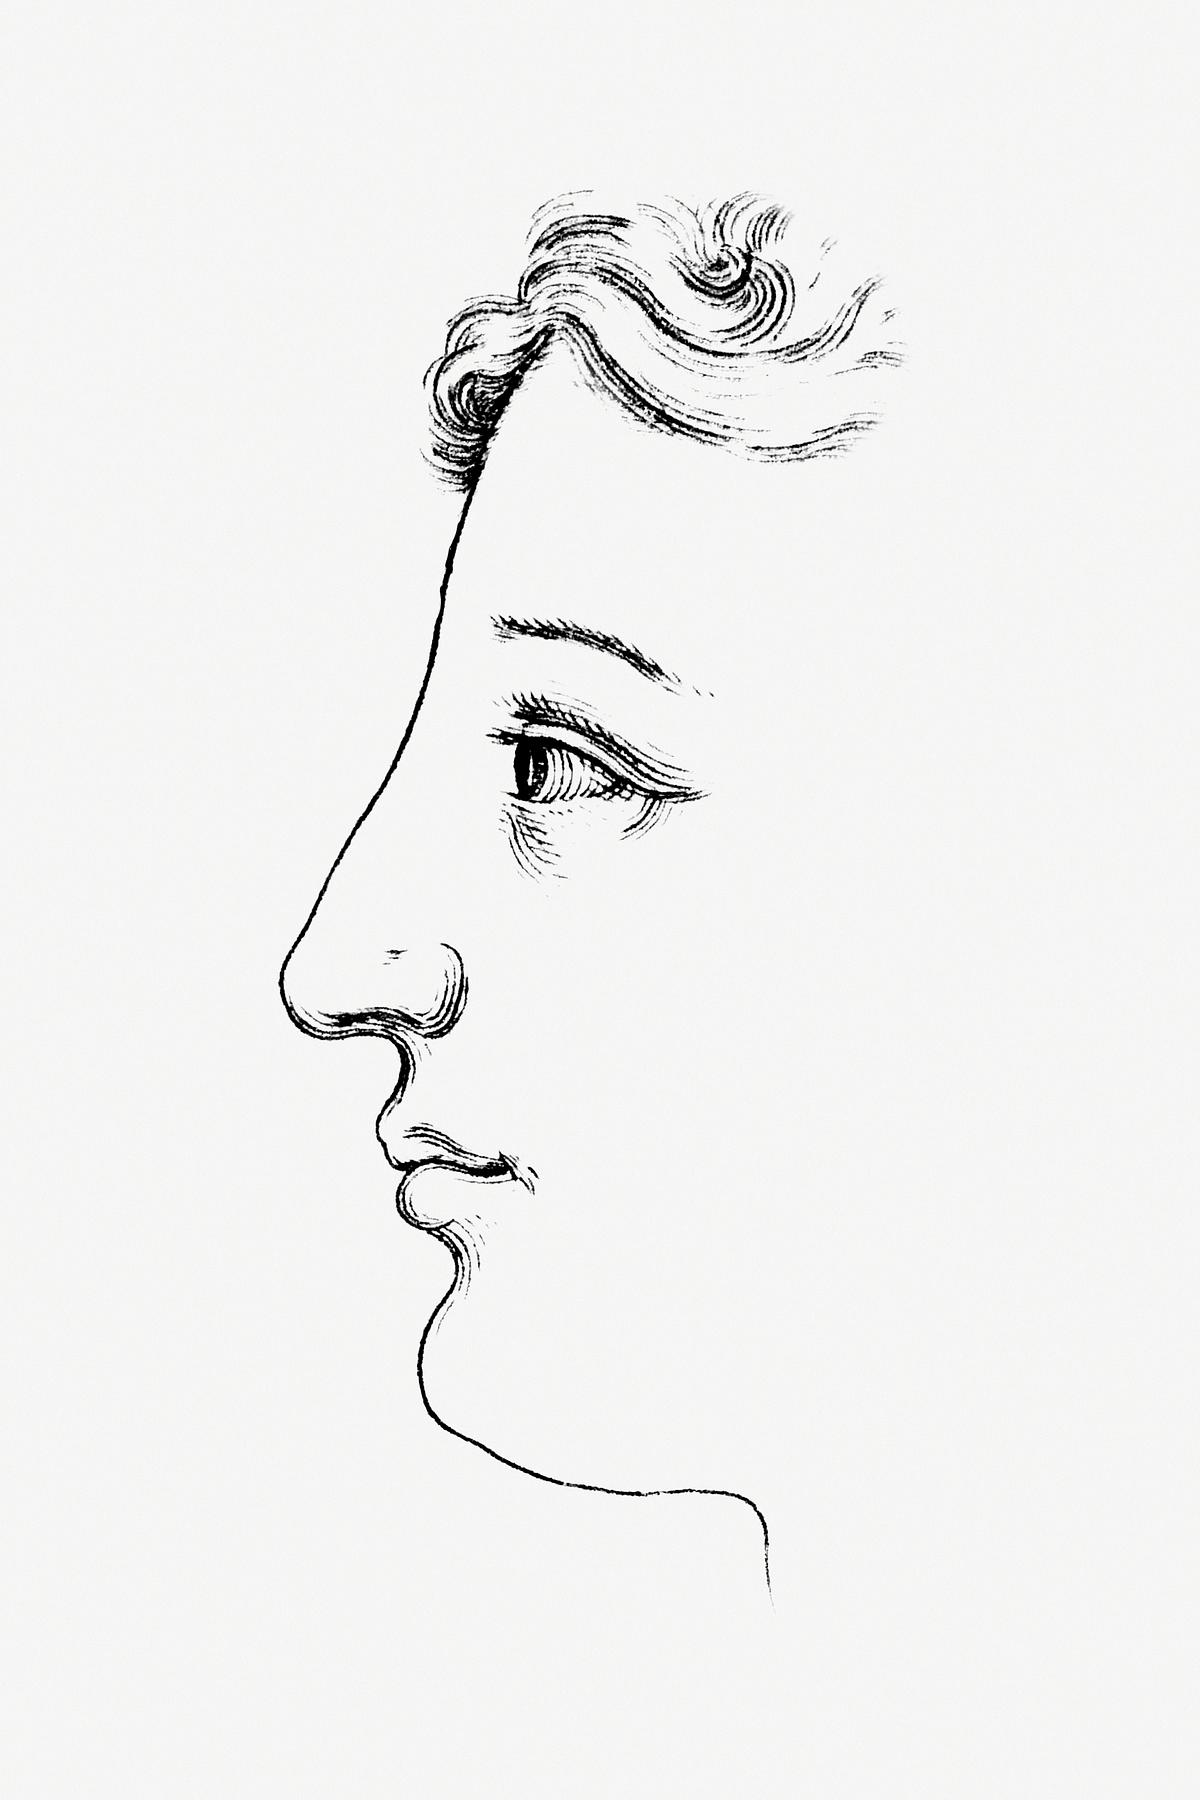 Human face monochrome vintage illustration | Premium PSD Illustration